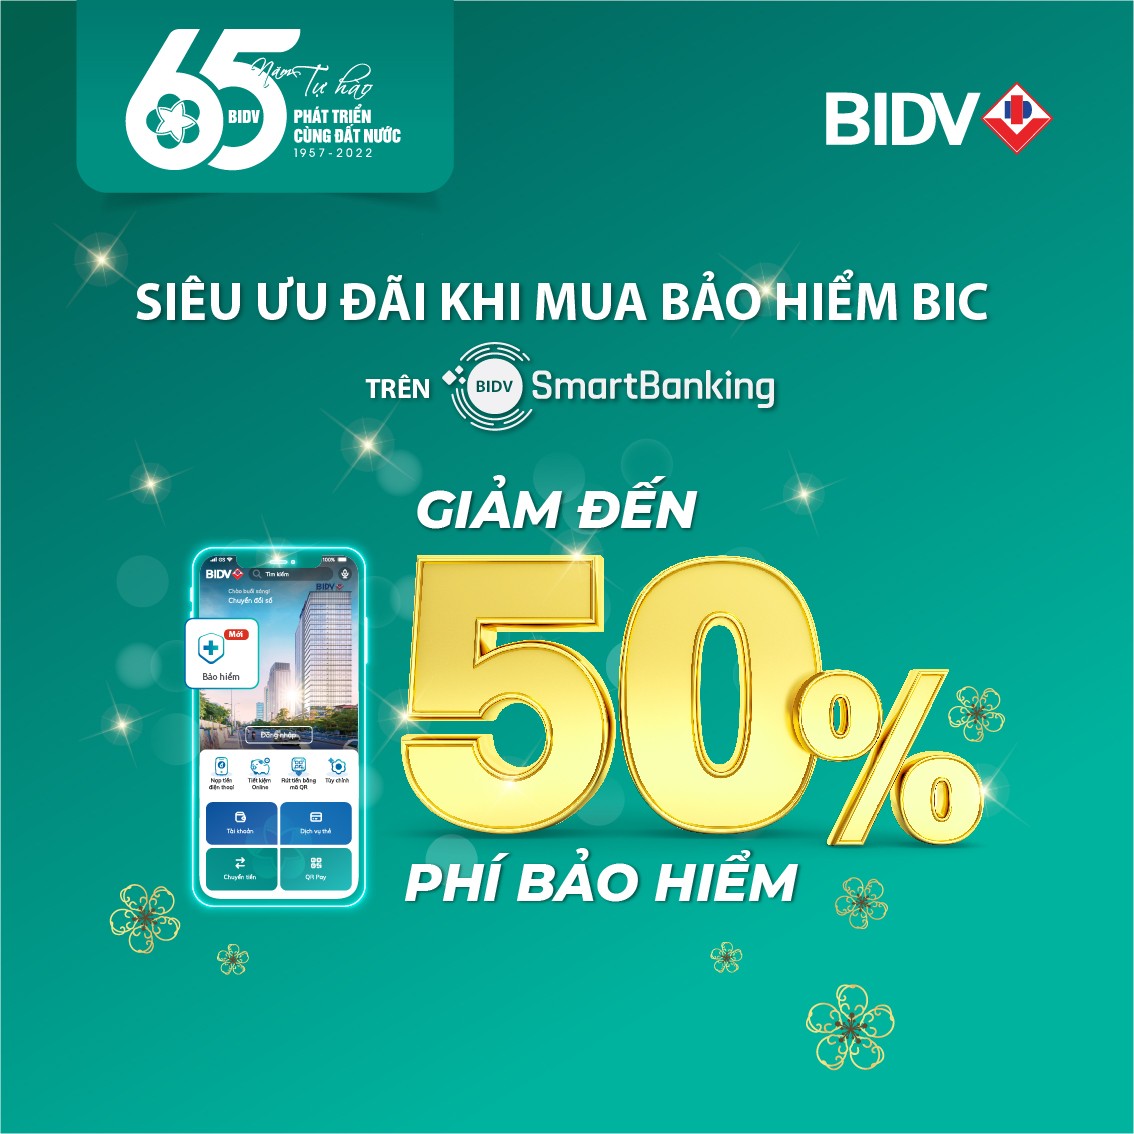 BIDV Ưu đãi tới 50% khi mua bảo hiểm BIC qua ứng dụng BIDV SmartBa